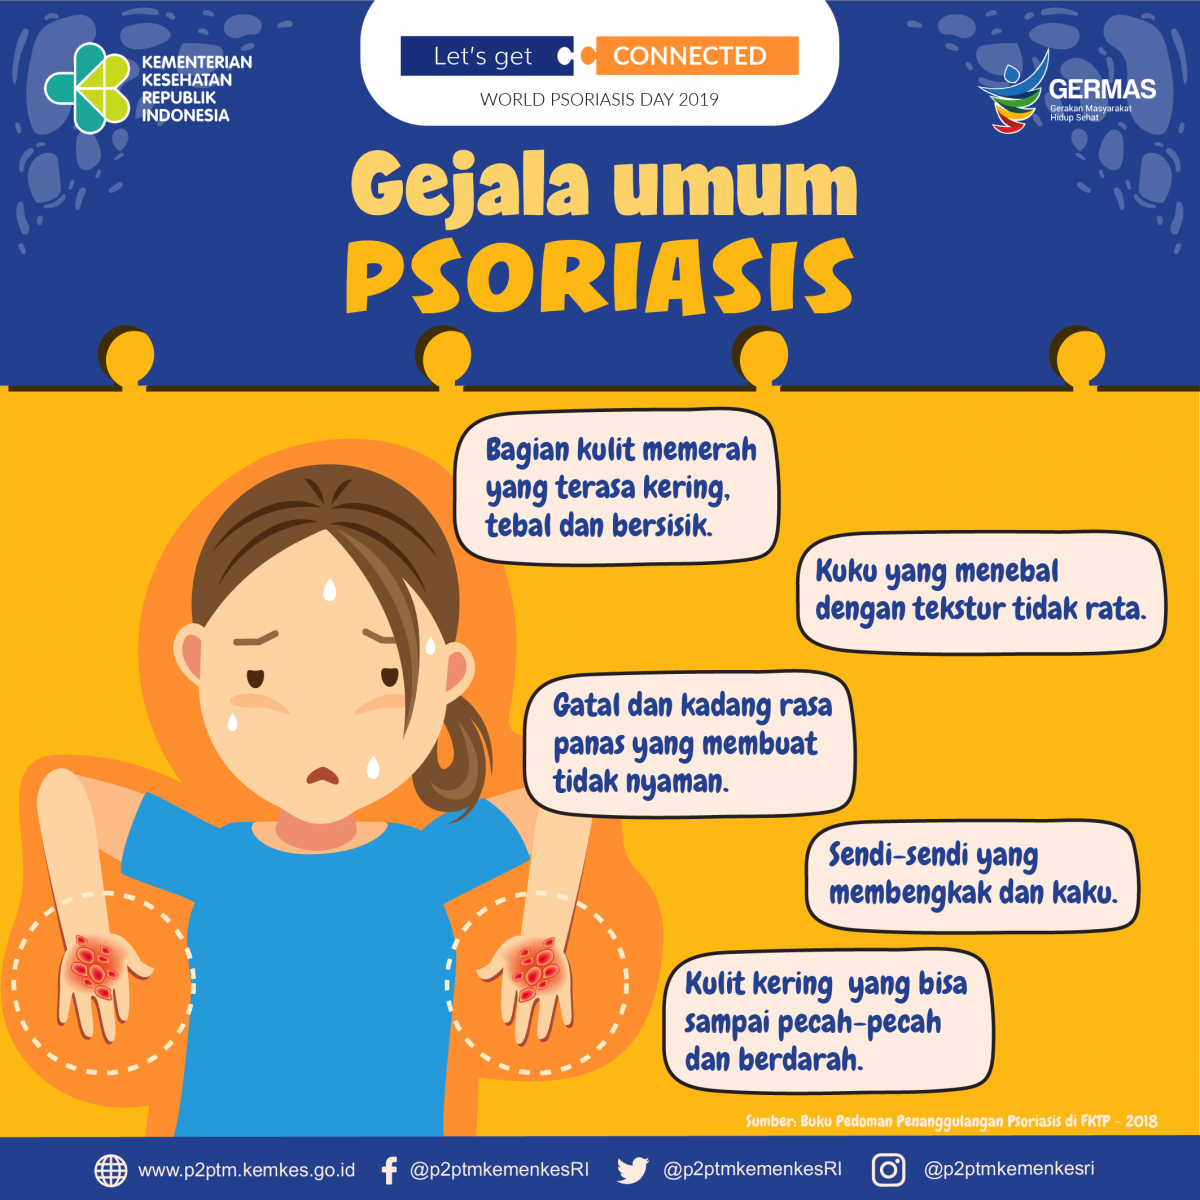 Apa saja Gejala Umum Psoriasis?